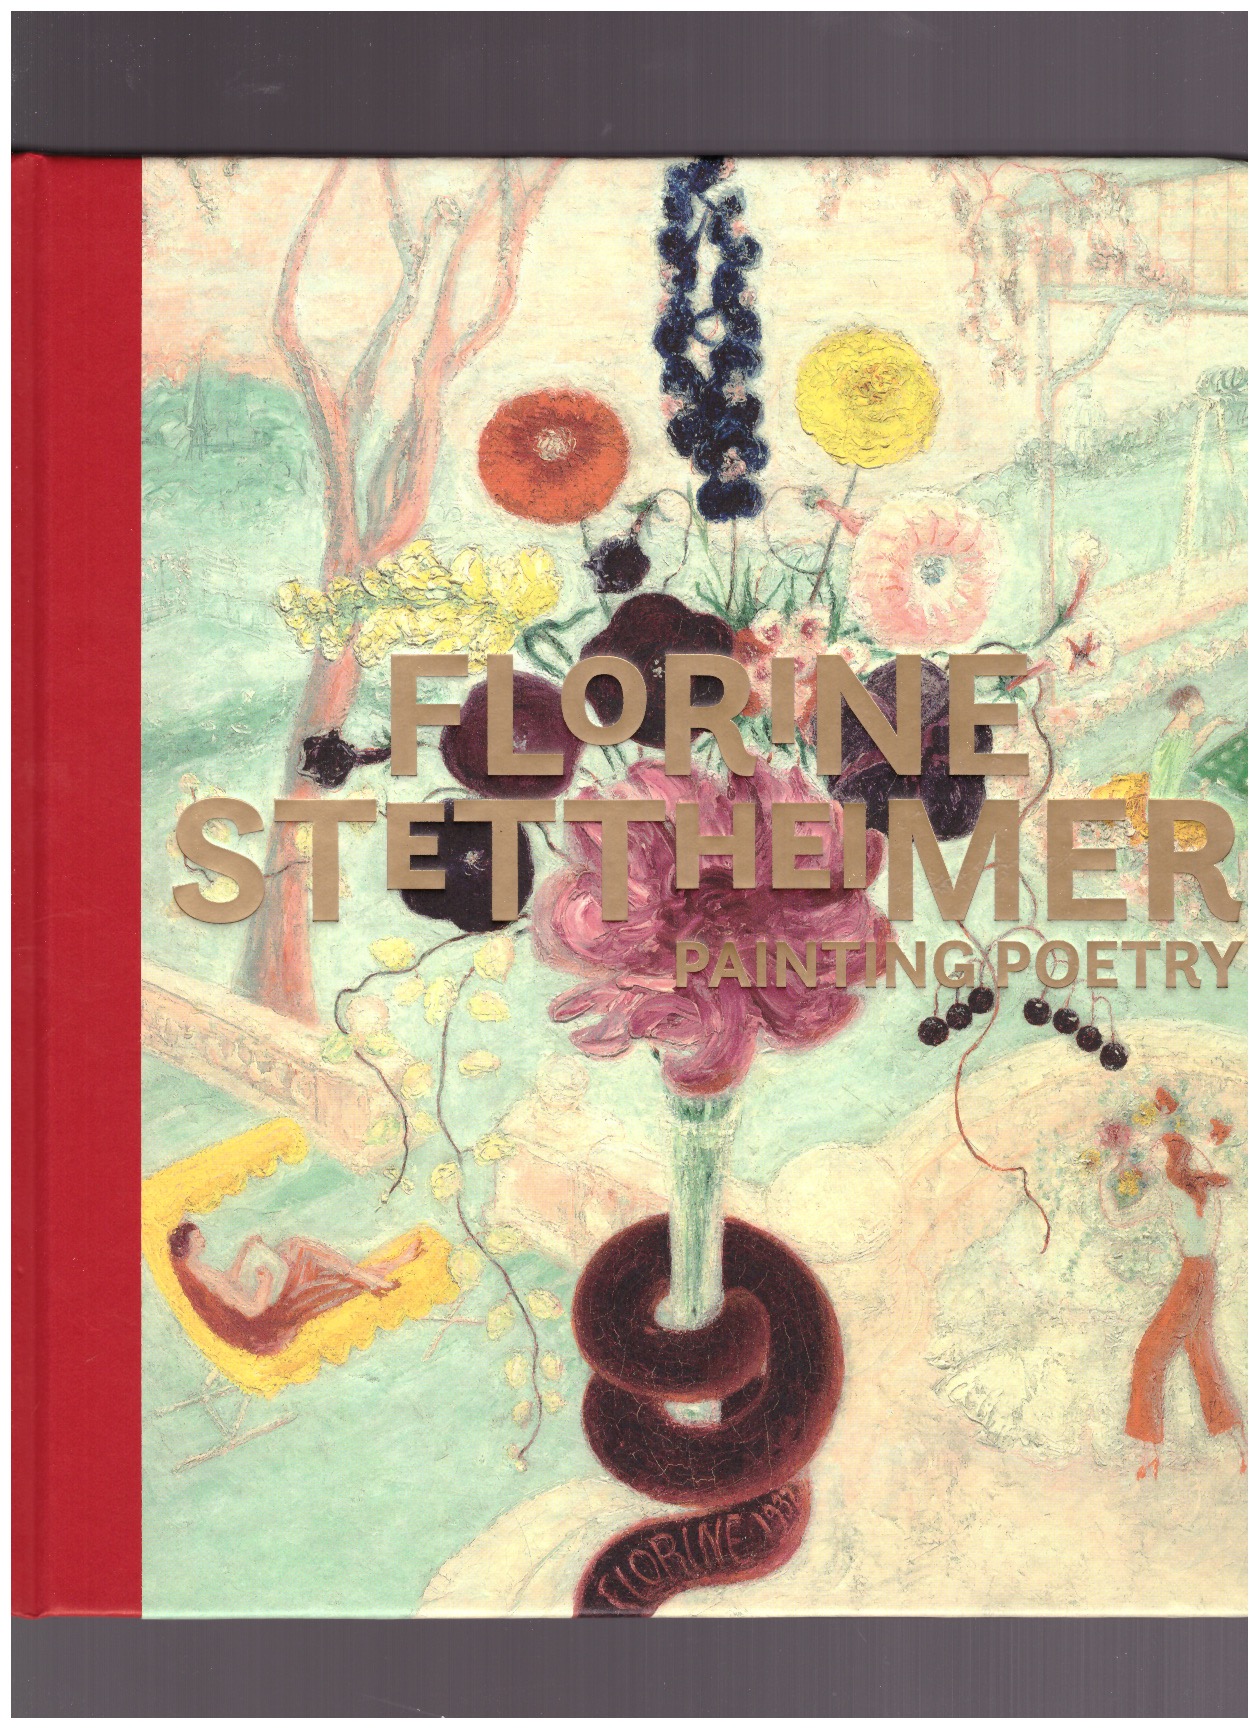 STETTHEIMER, Florine; BROWN, Stephen (ed.); UHLYARIK, Georgiana (ed.) - Florine Stettheimer: Painting Poetry